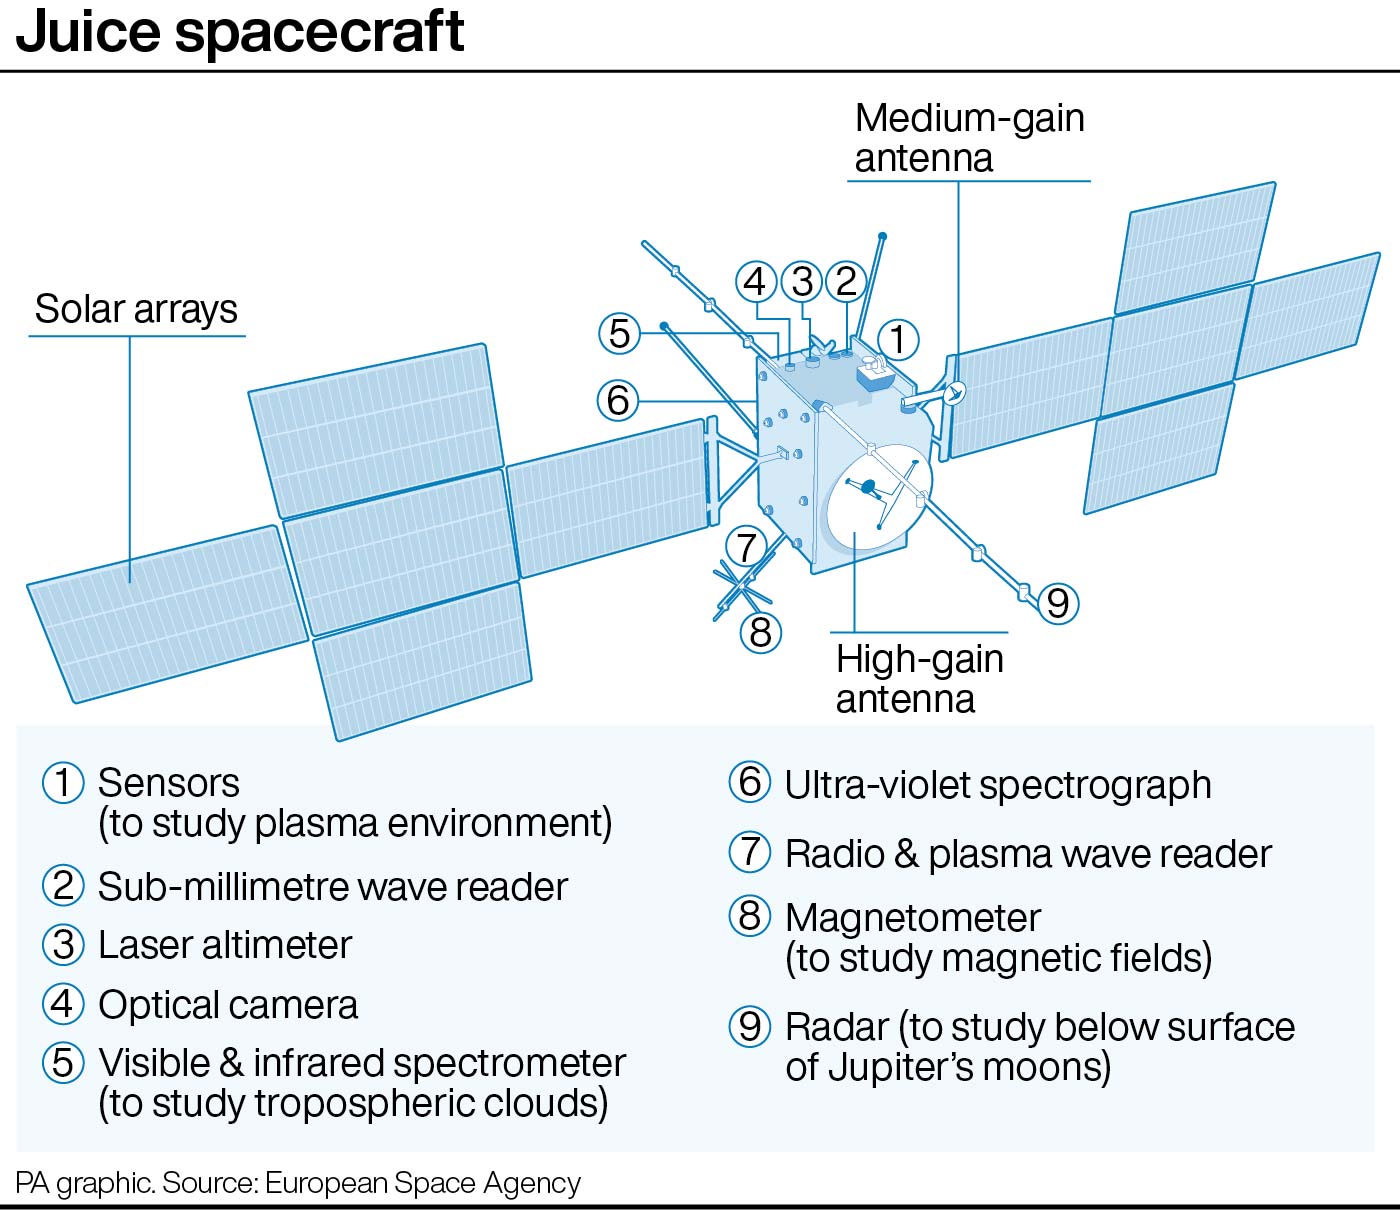 Juice spacecraft graphic